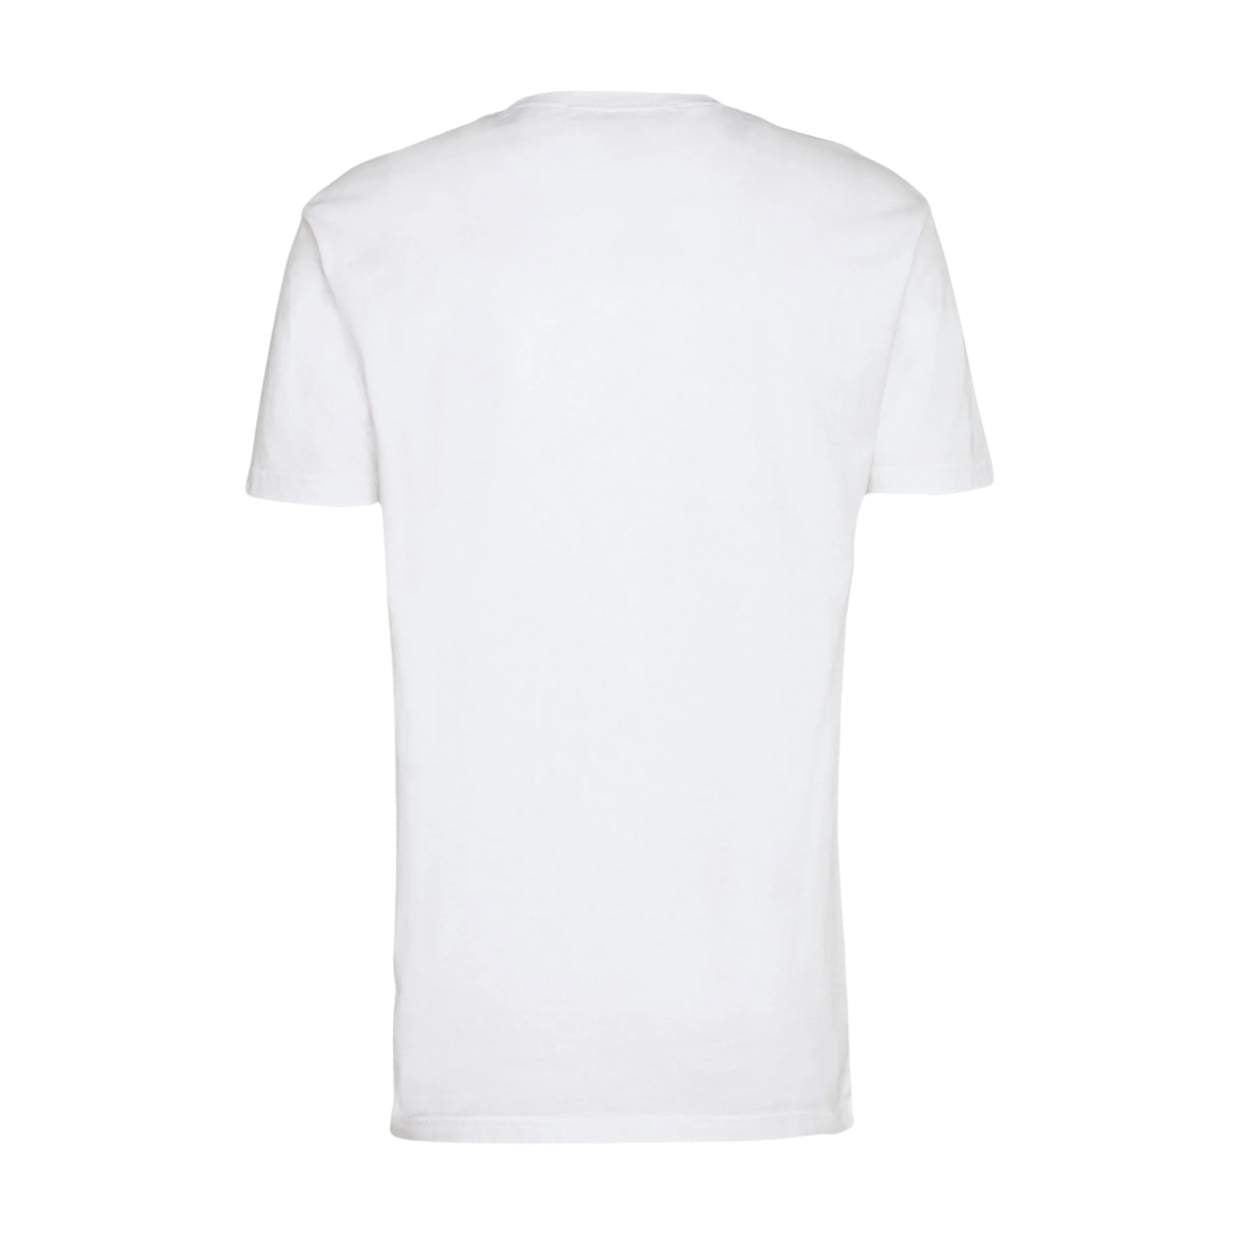 Vivienne Westwood Classic T-shirt White